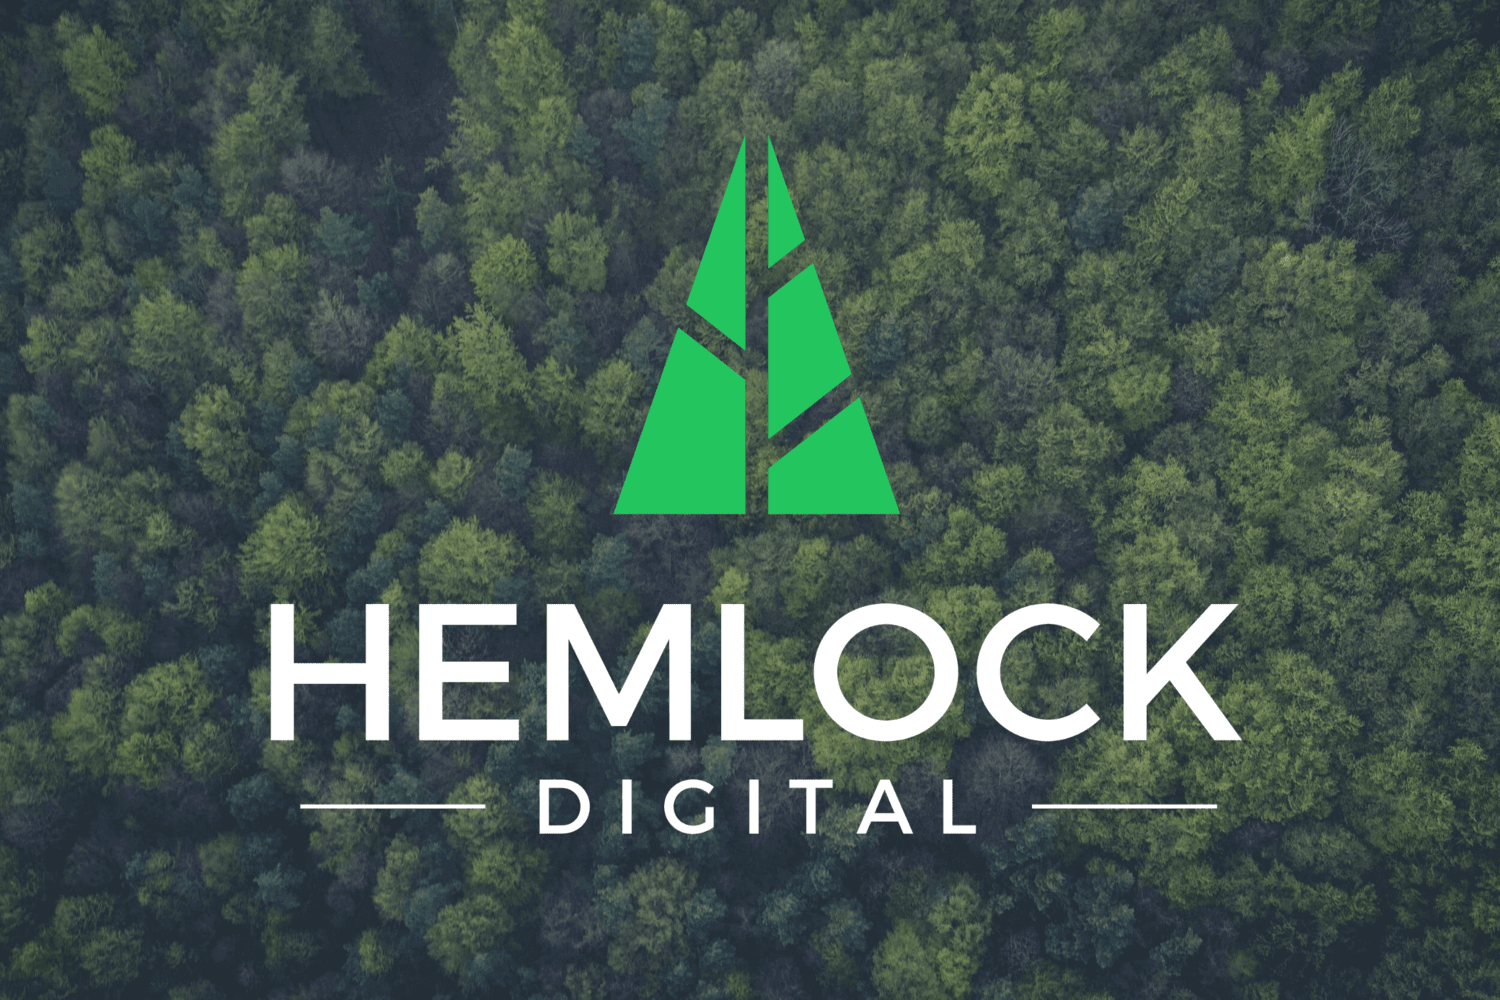 Hemlock Digital logo on a background of trees.